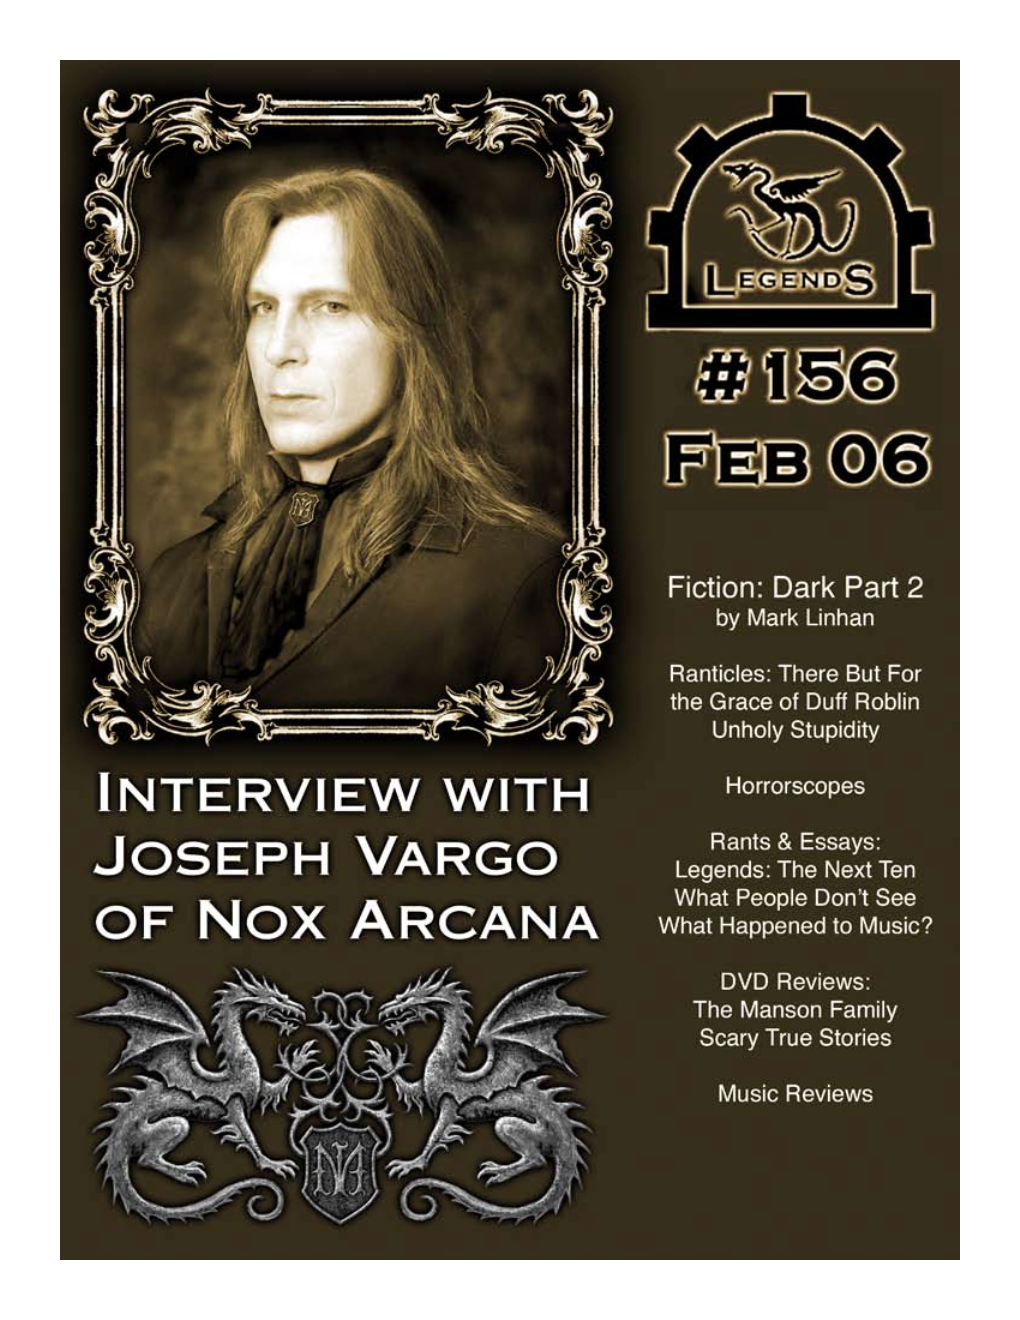 INTERVIEW: Nox Arcana (Joseph Vargo) by Marcus Pan